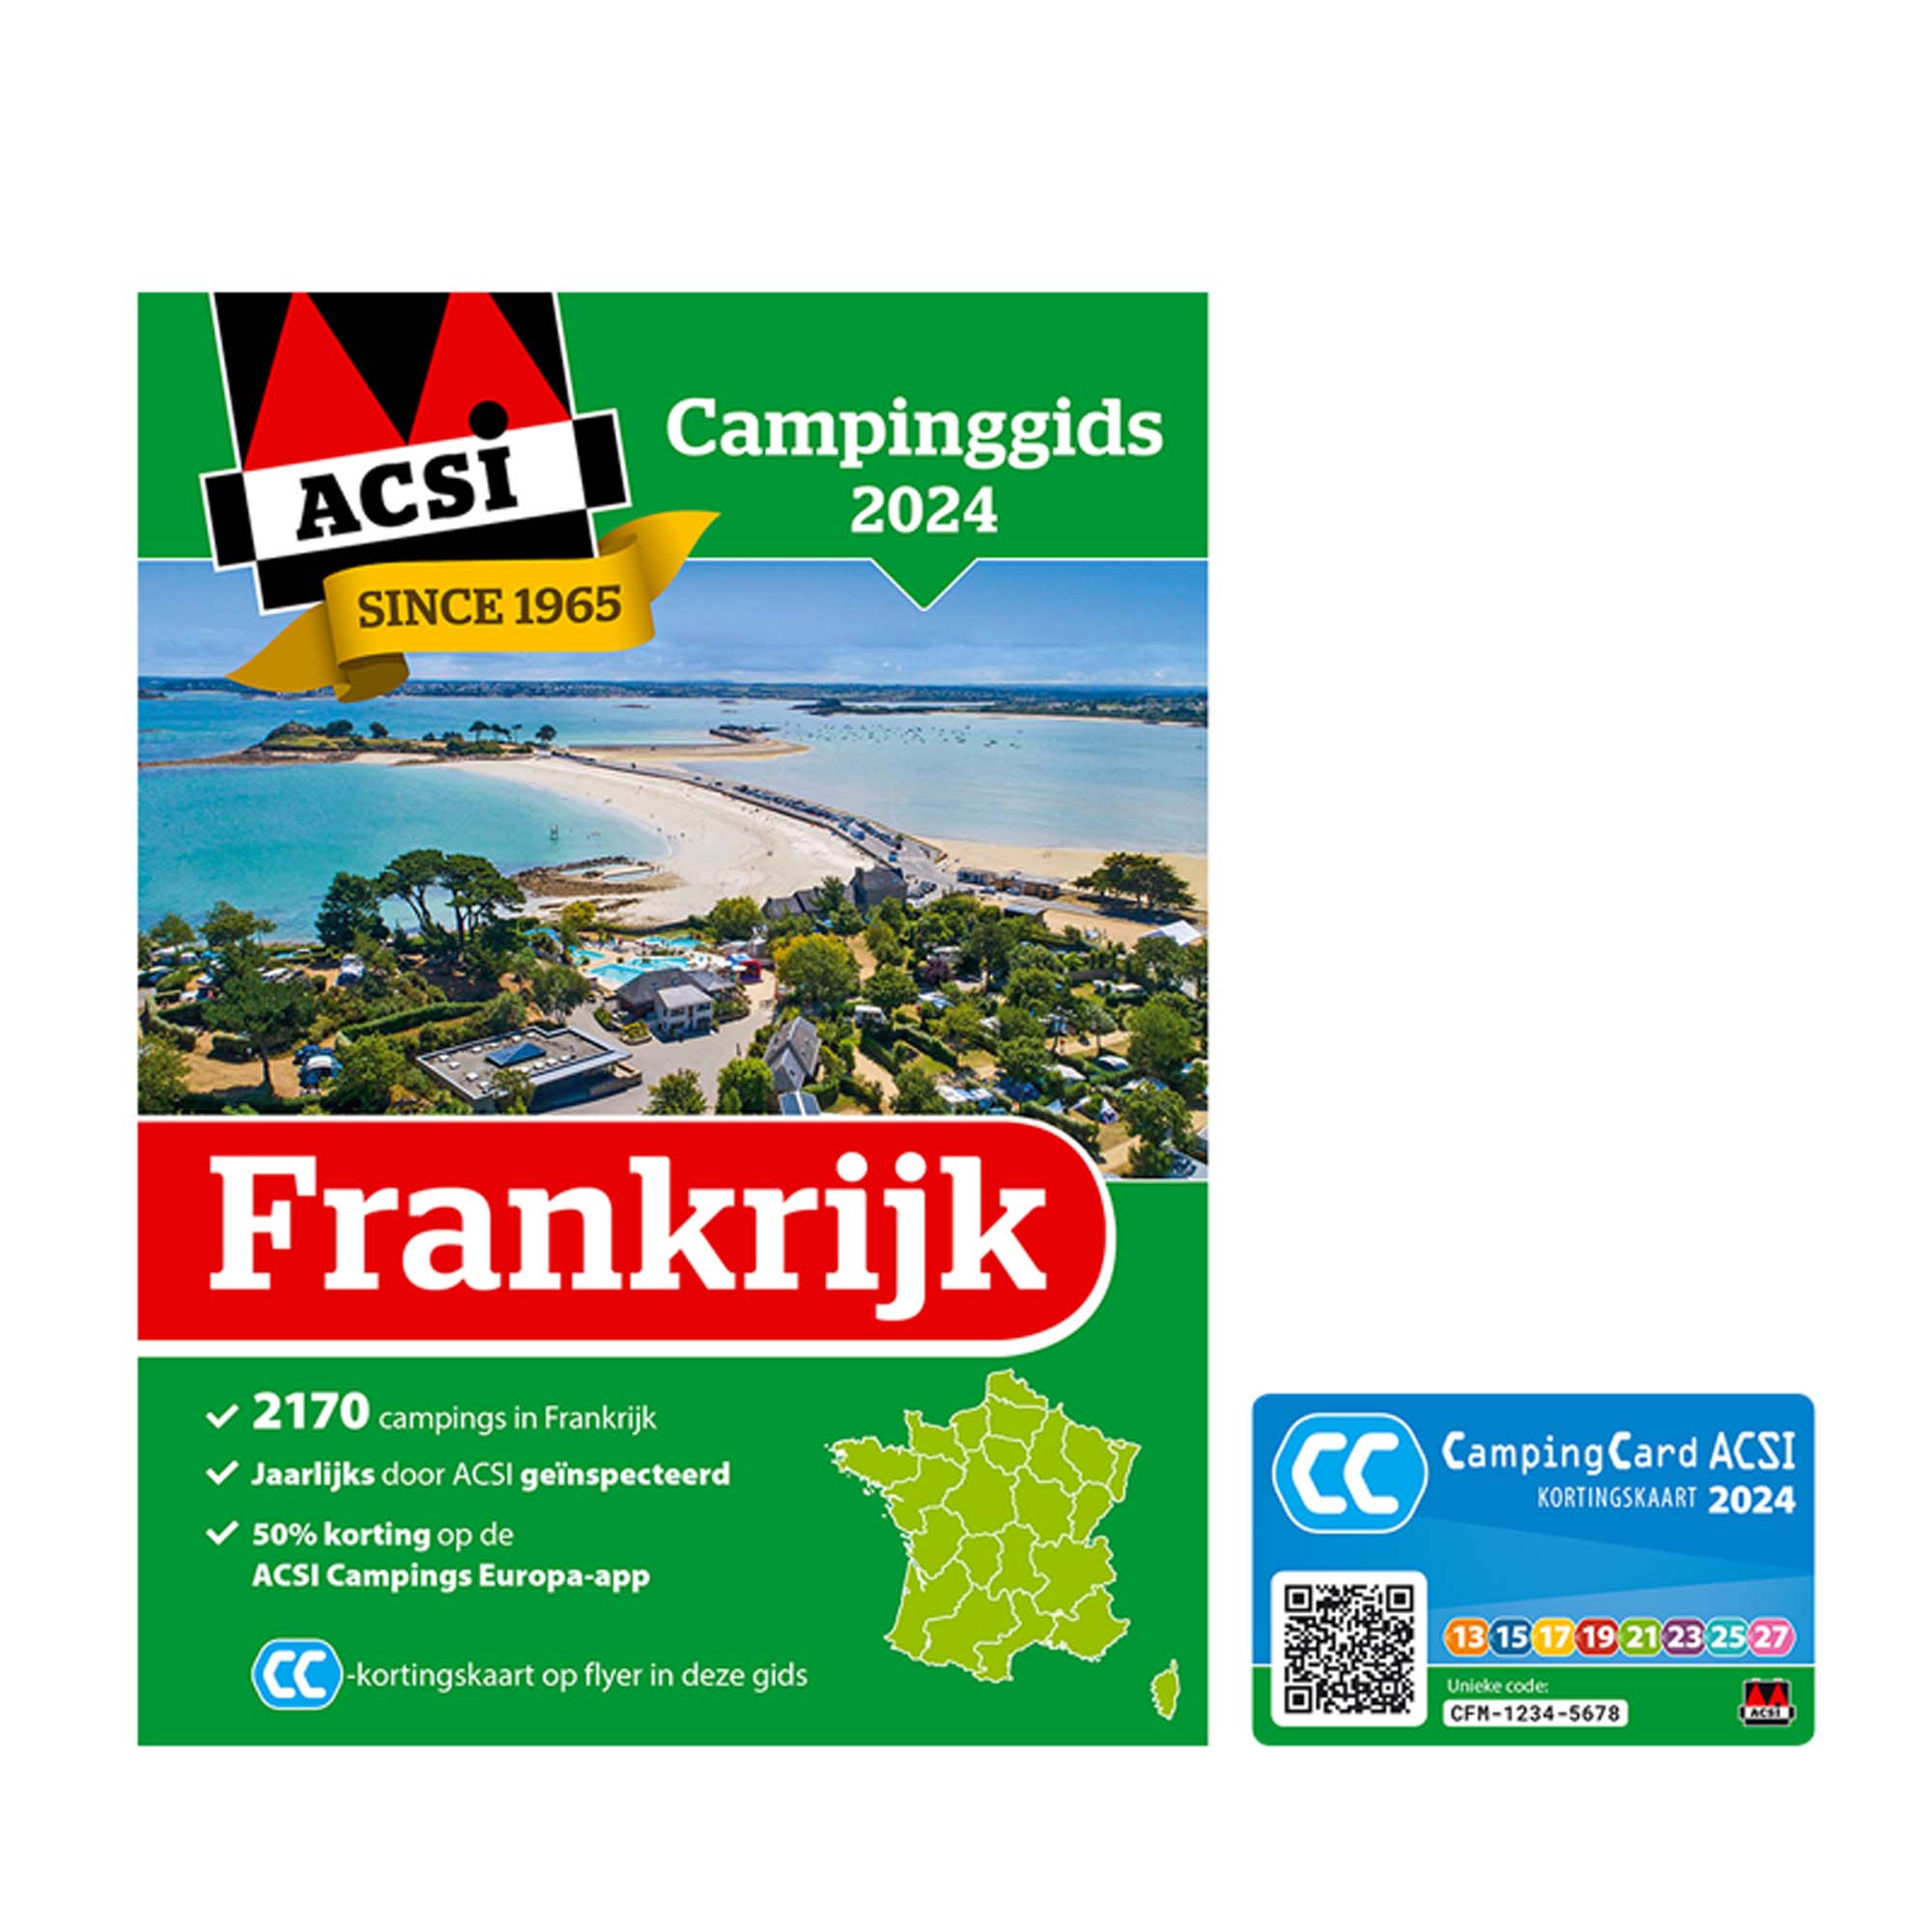 ACSI campinggids frankrijk 2024